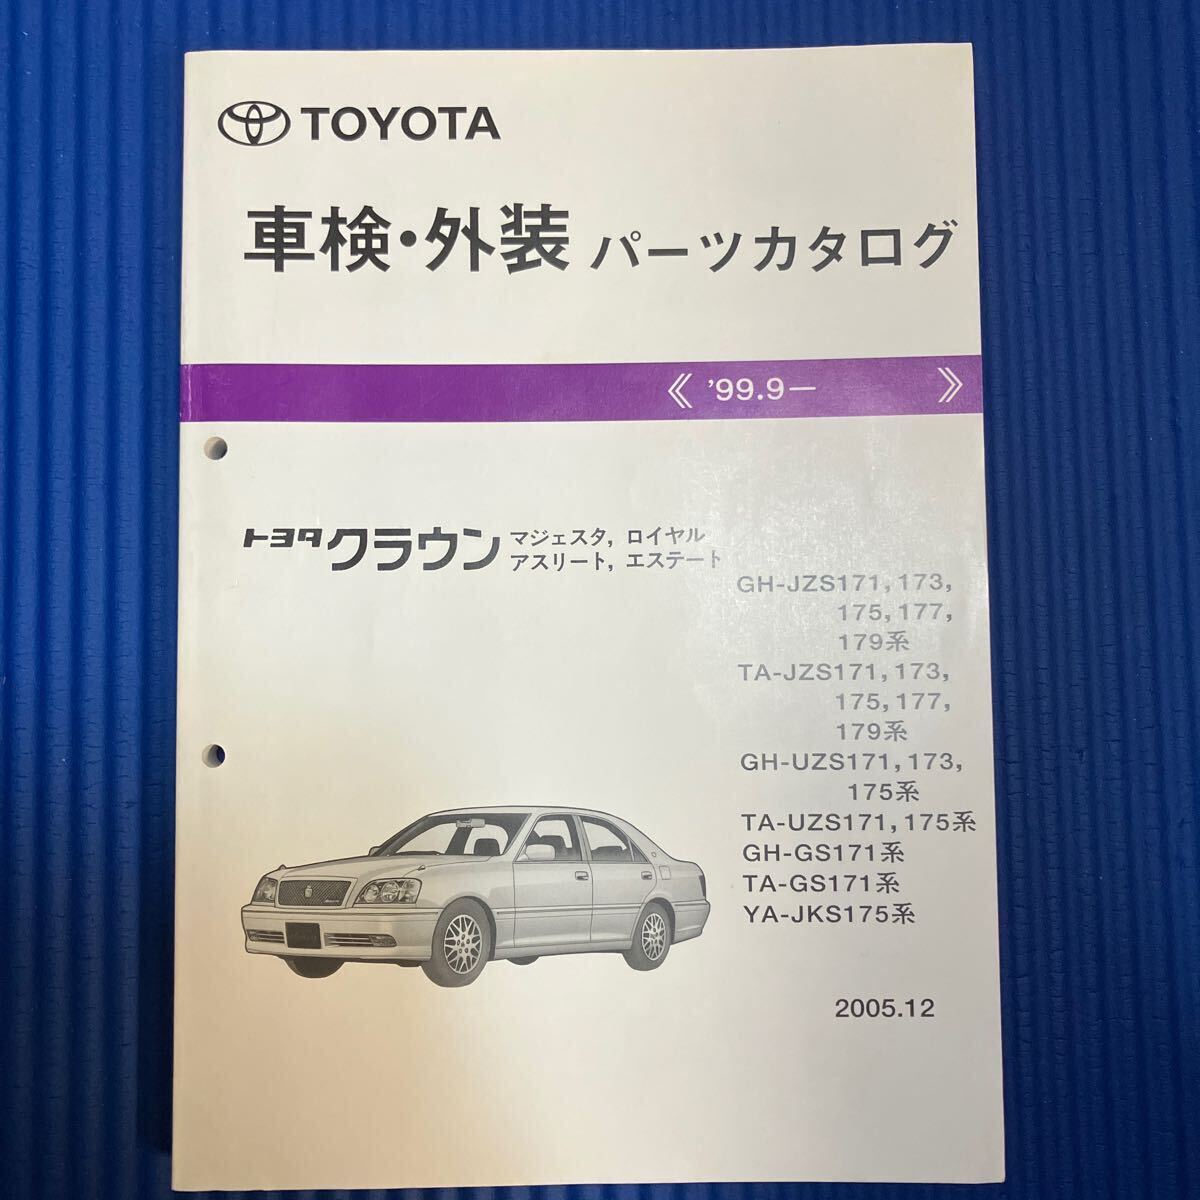  Toyota 17 Crown Majesta Royal Athlete Estate детали каталог запчастей детали детали каталог 